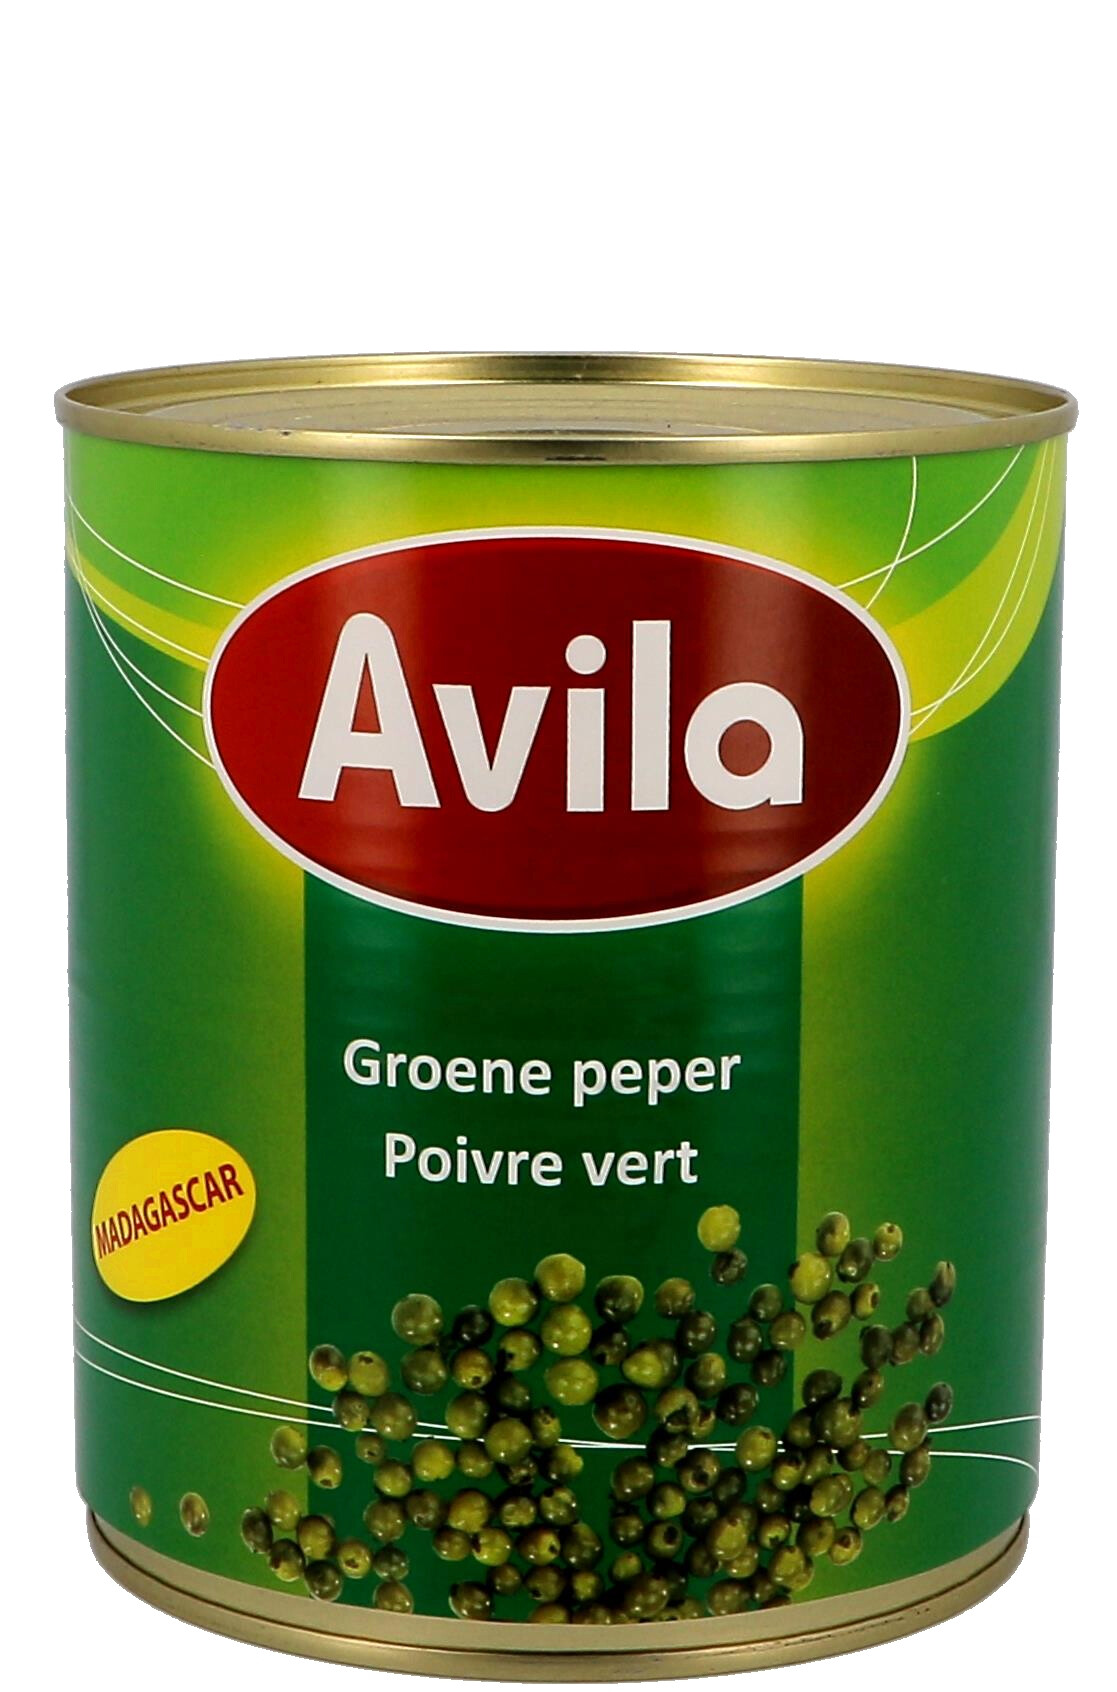 Avila Green Peppercorn in brine 800gr canned